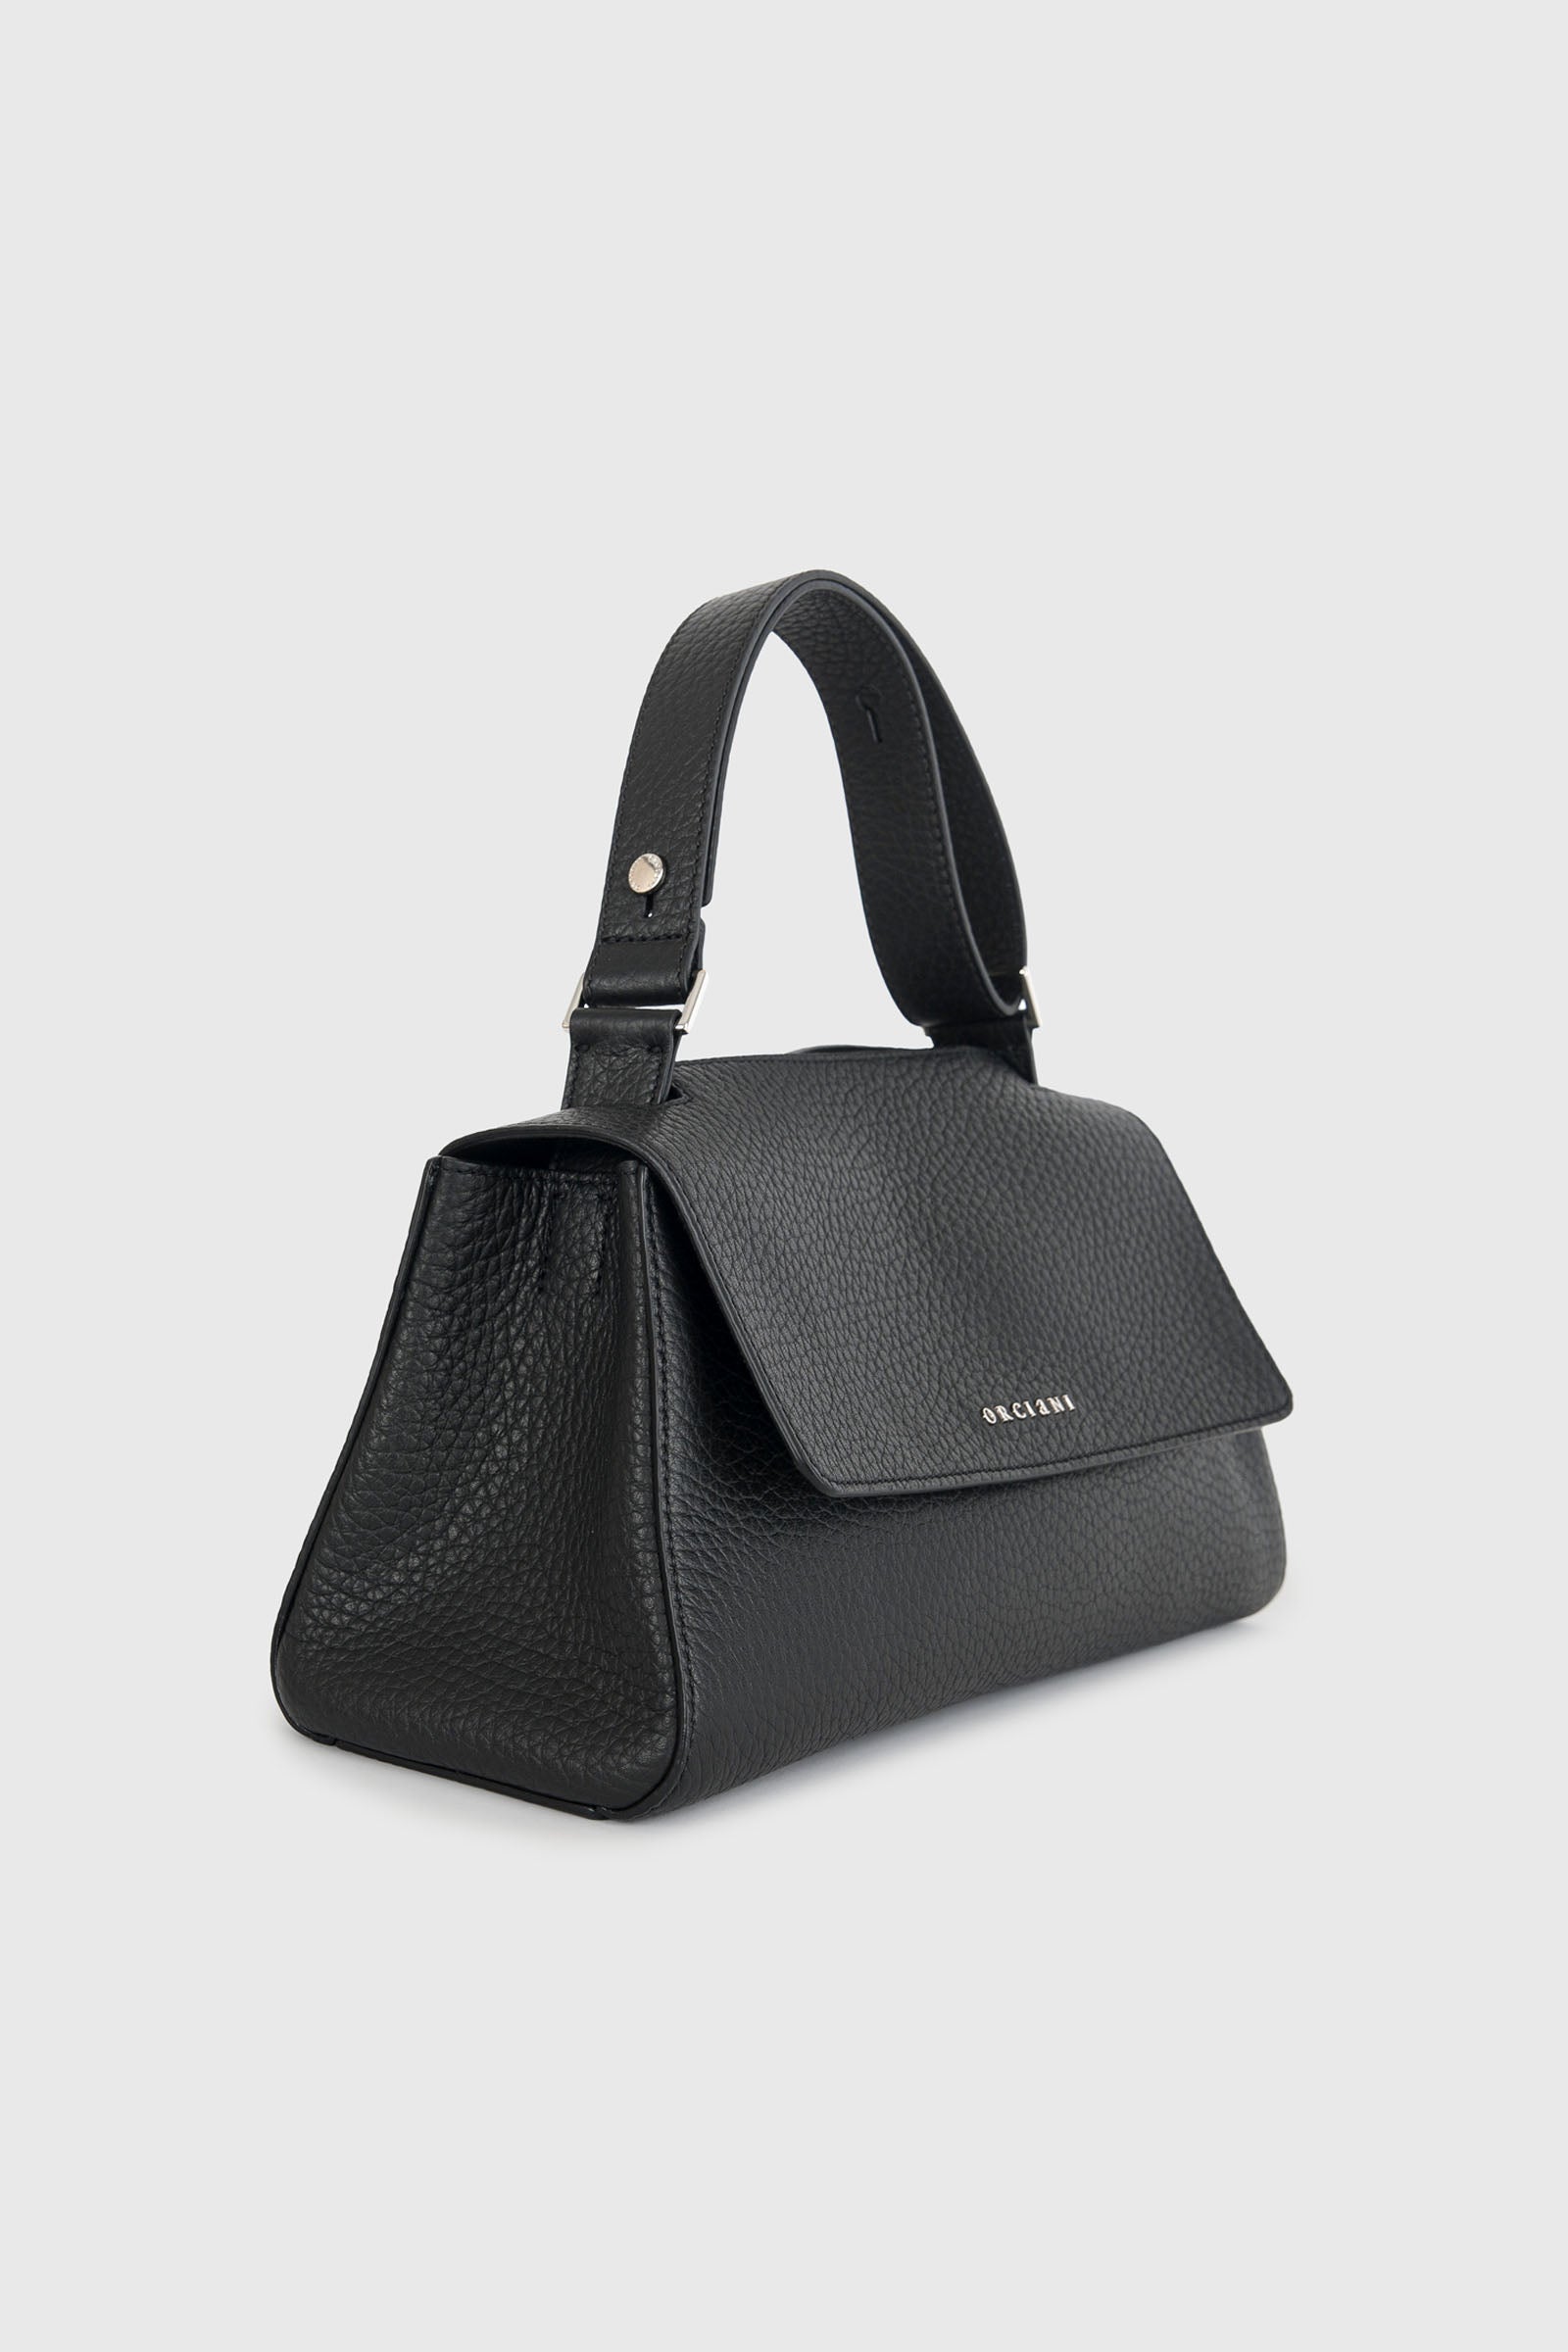 Orciani Sveva Longuette Soft Black Leather Bag - 2